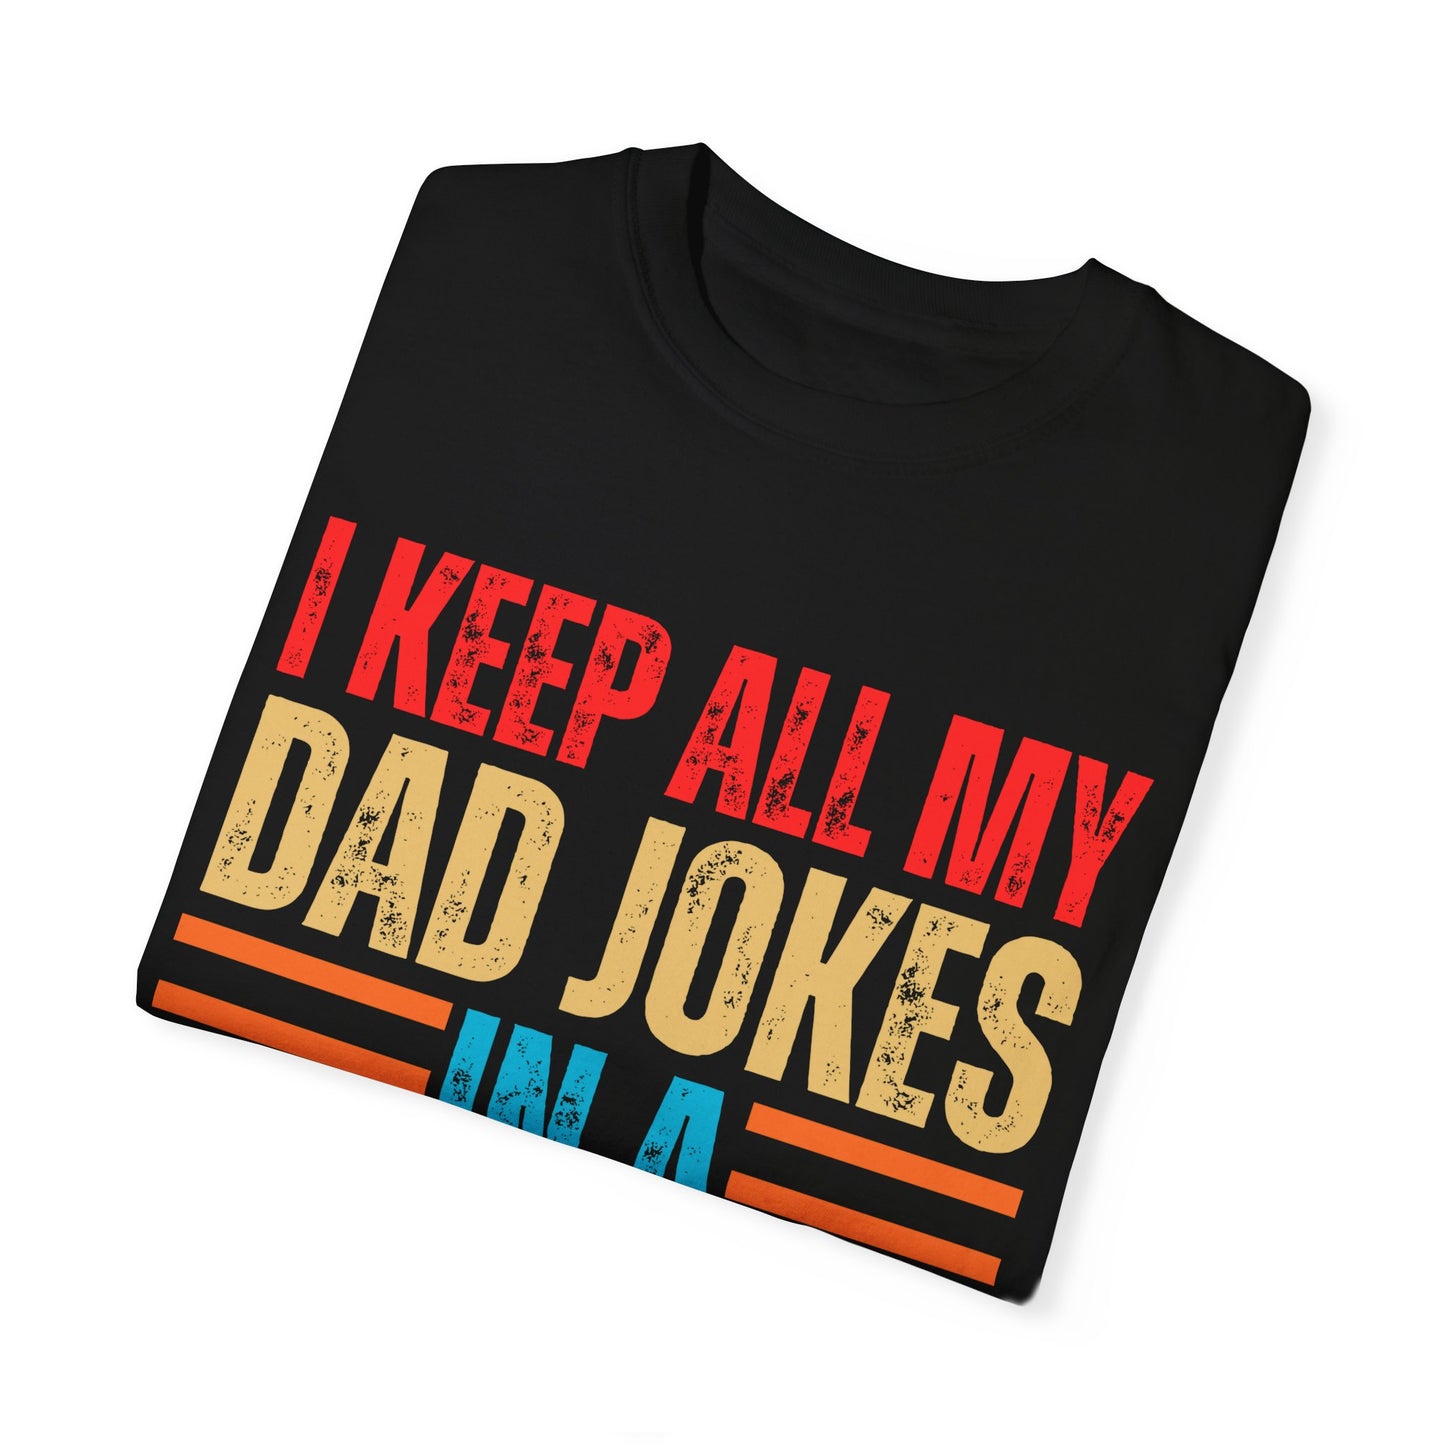 To My Dad | Dad Jokes| Unisex Garment-Dyed T-shirt